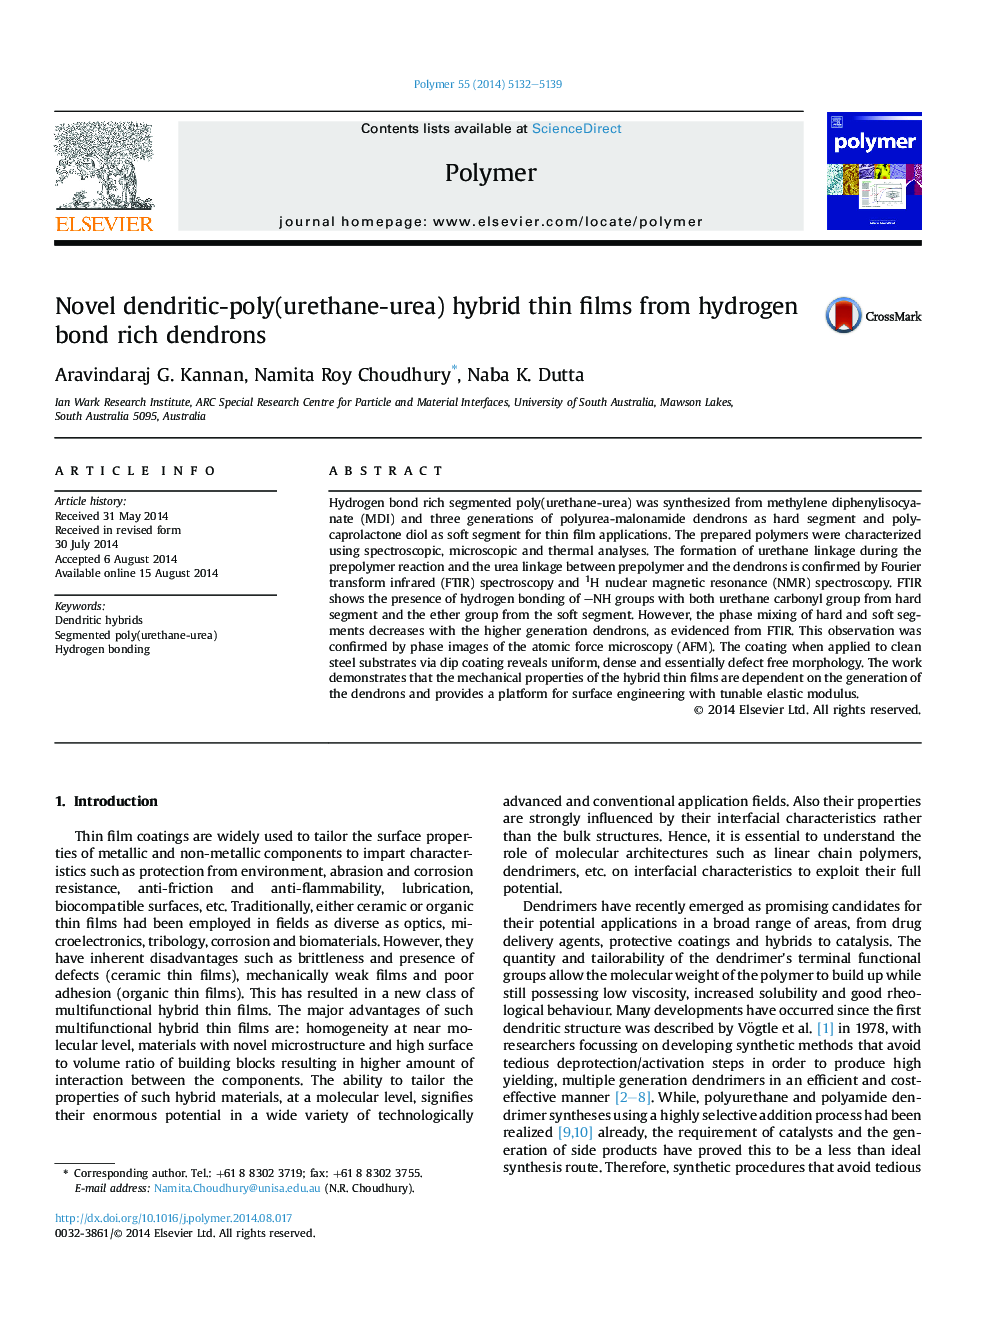 Novel dendritic-poly(urethane-urea) hybrid thin films from hydrogen bond rich dendrons